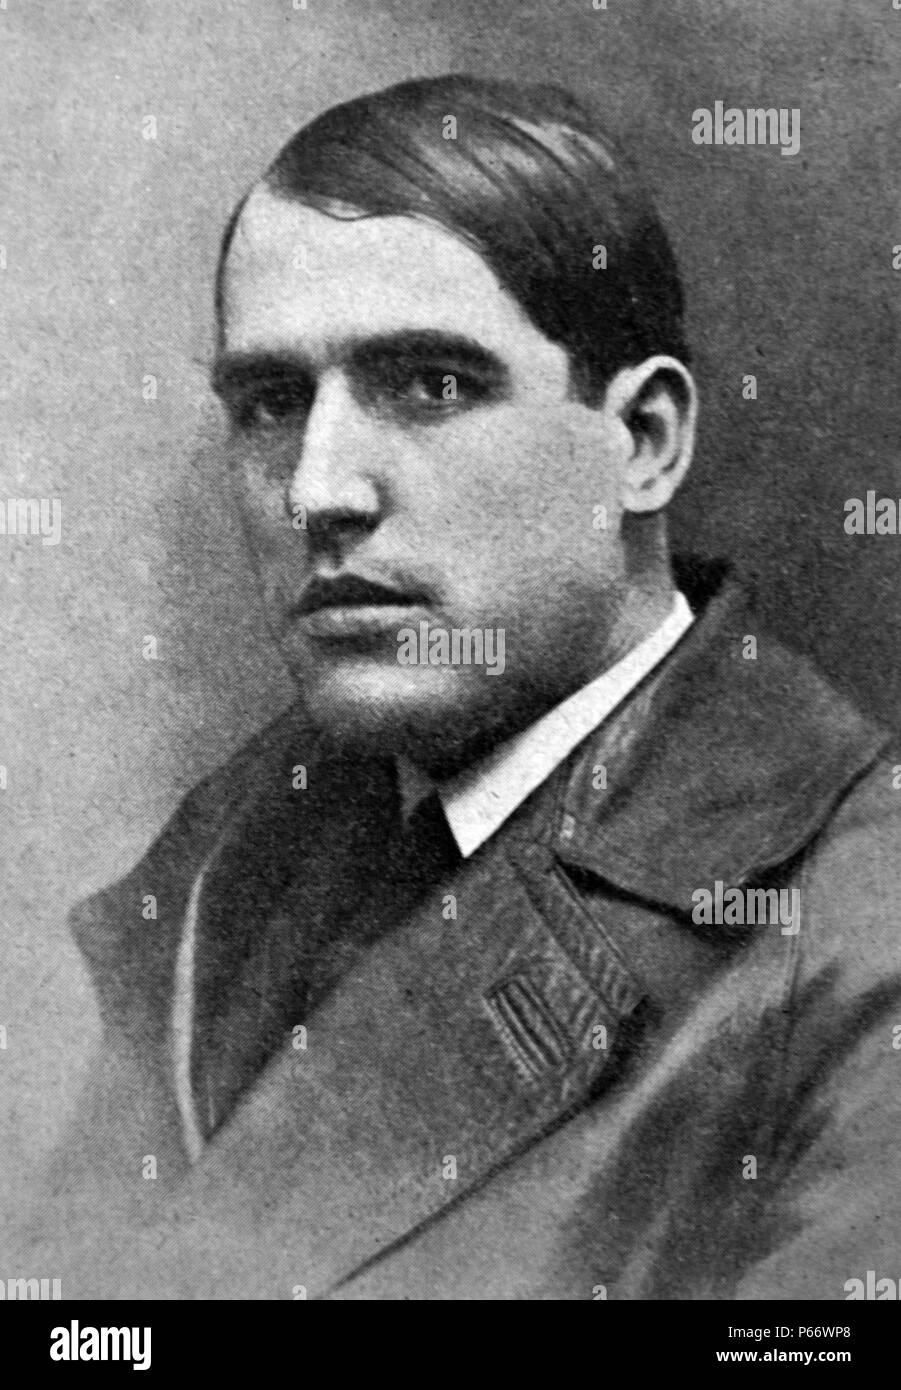 Spanish civil war: Ramiro Ledesma Ramos (May 23, 1905, Alfaraz of Resume, Zamora - October 29, 1936, Aravaca, Madrid) Spanish national syndicalist politician, essayist, and journalist. Stock Photo